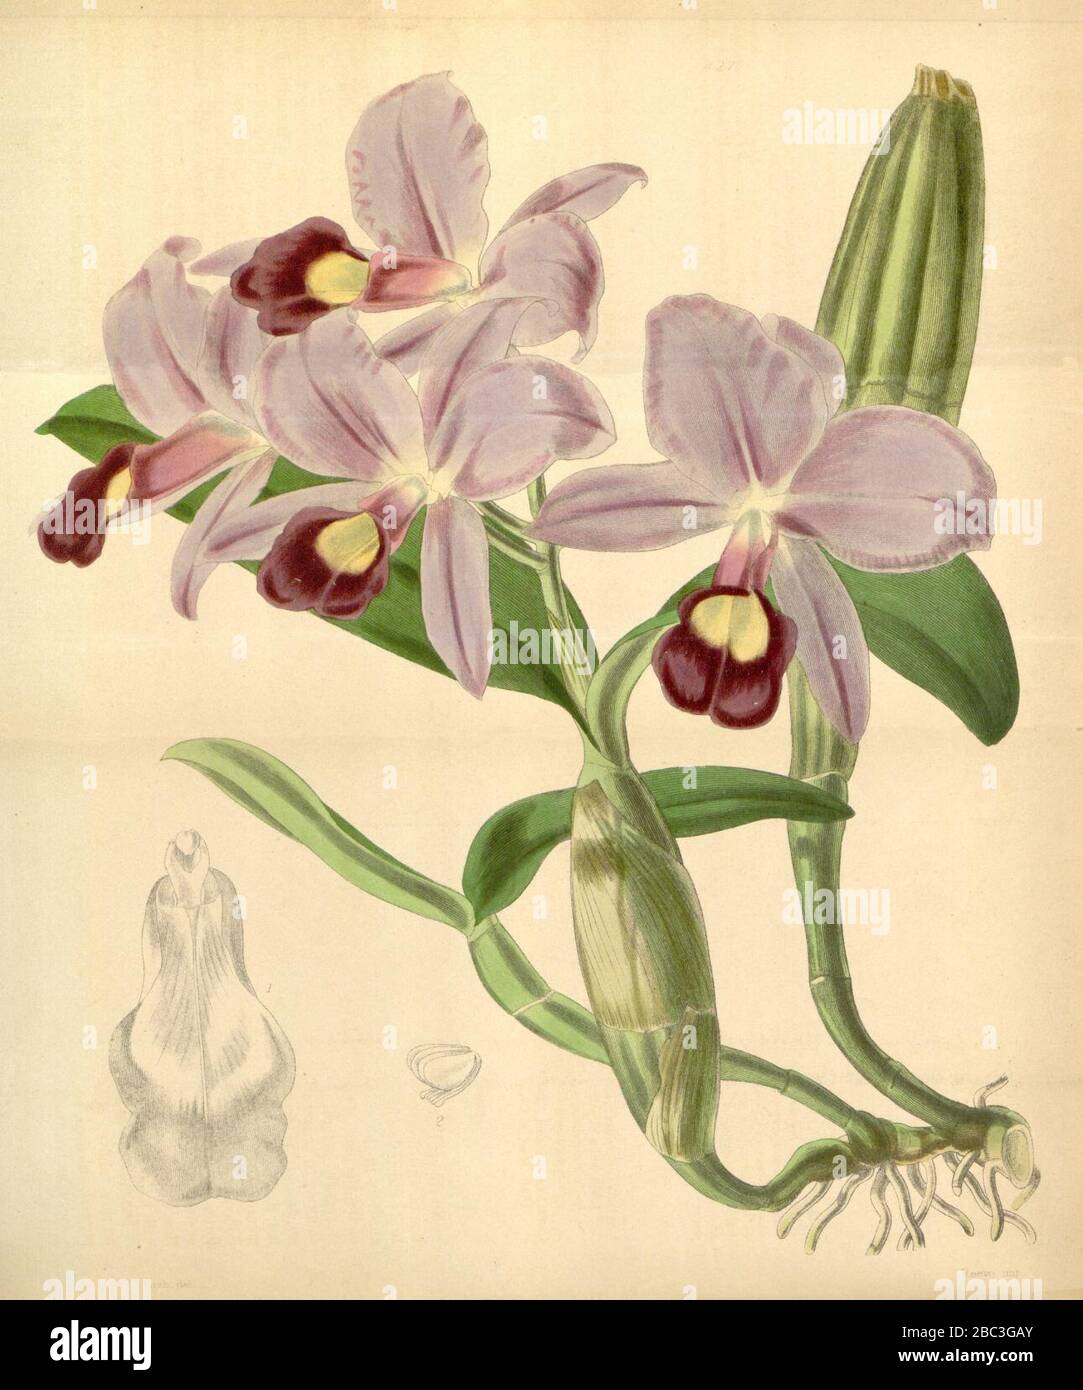 Guarianthe skinneri (as Cattleya skinneri) - Curtis' 72 (Ser. 3 no. 2) pl. 4270 (1846). Stock Photo